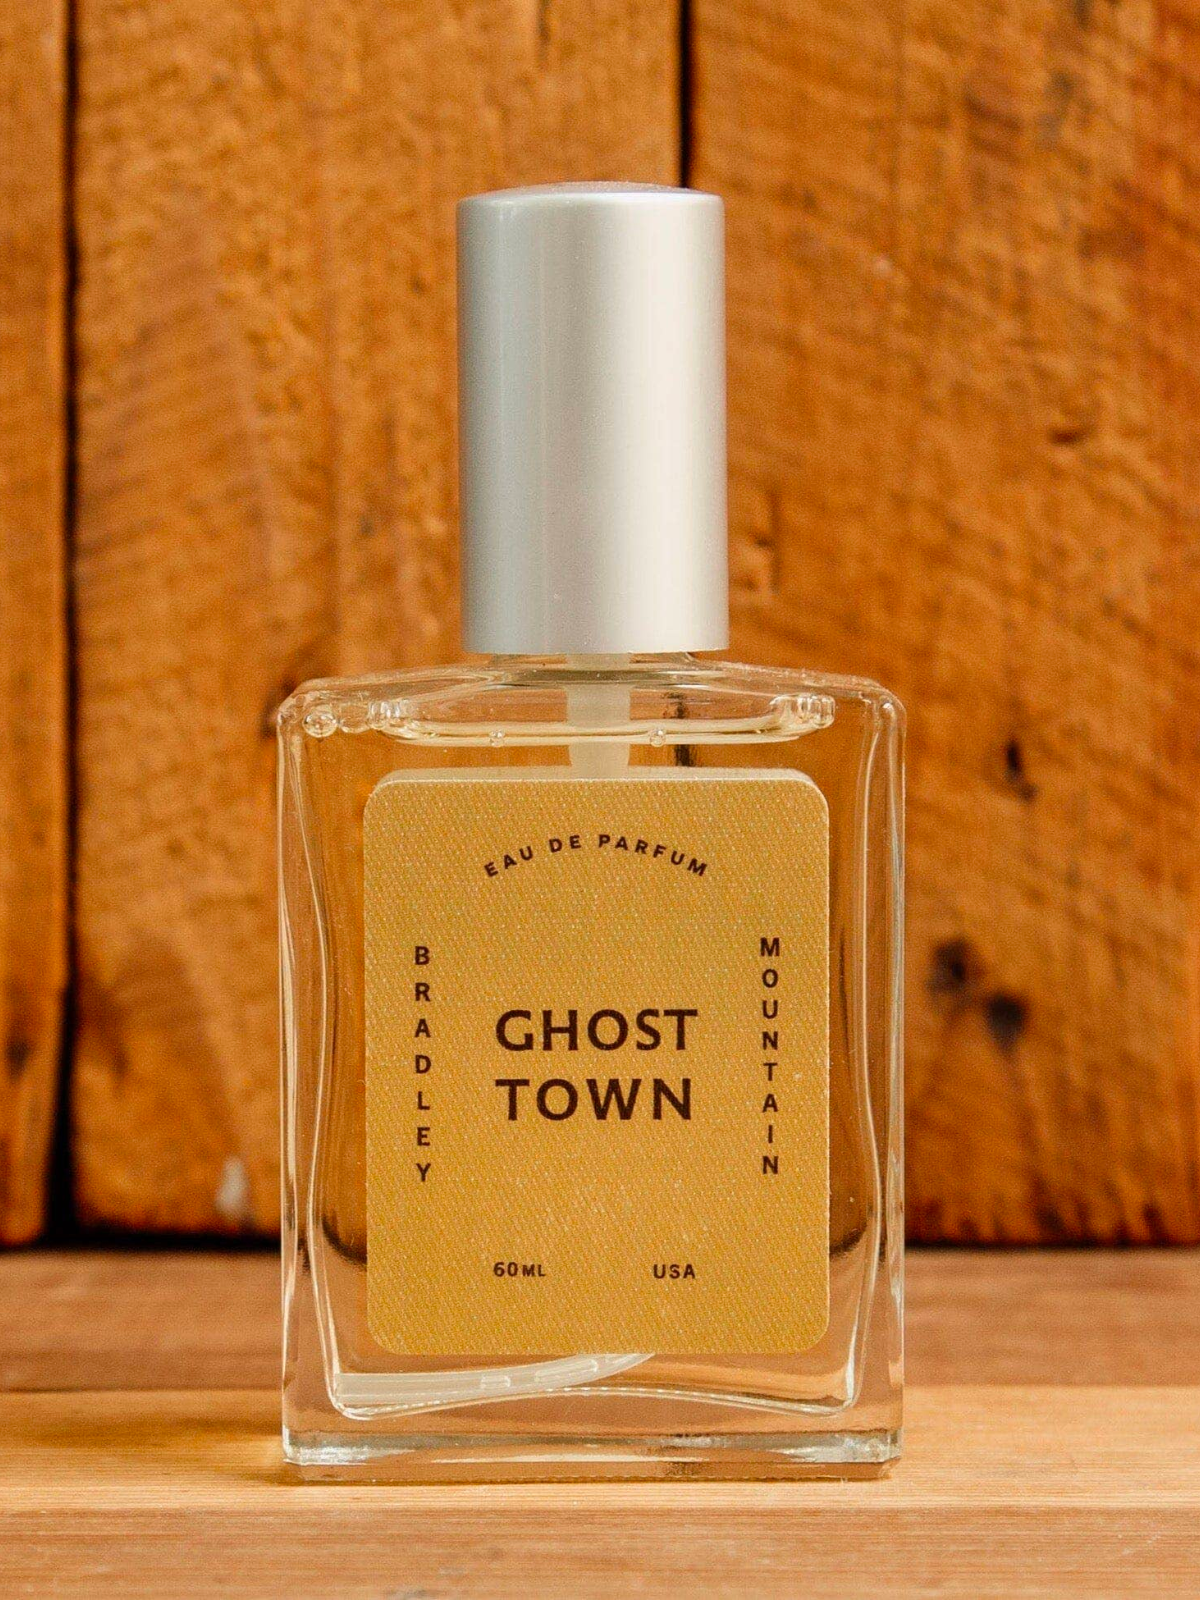 bradley mountain cologne eau de parfum ghost town scent notes: Peppercorn, Agarwood, Vetiver, Burnt Orange 60ML bottle travel size kempt athens ga georgia men's clothing store